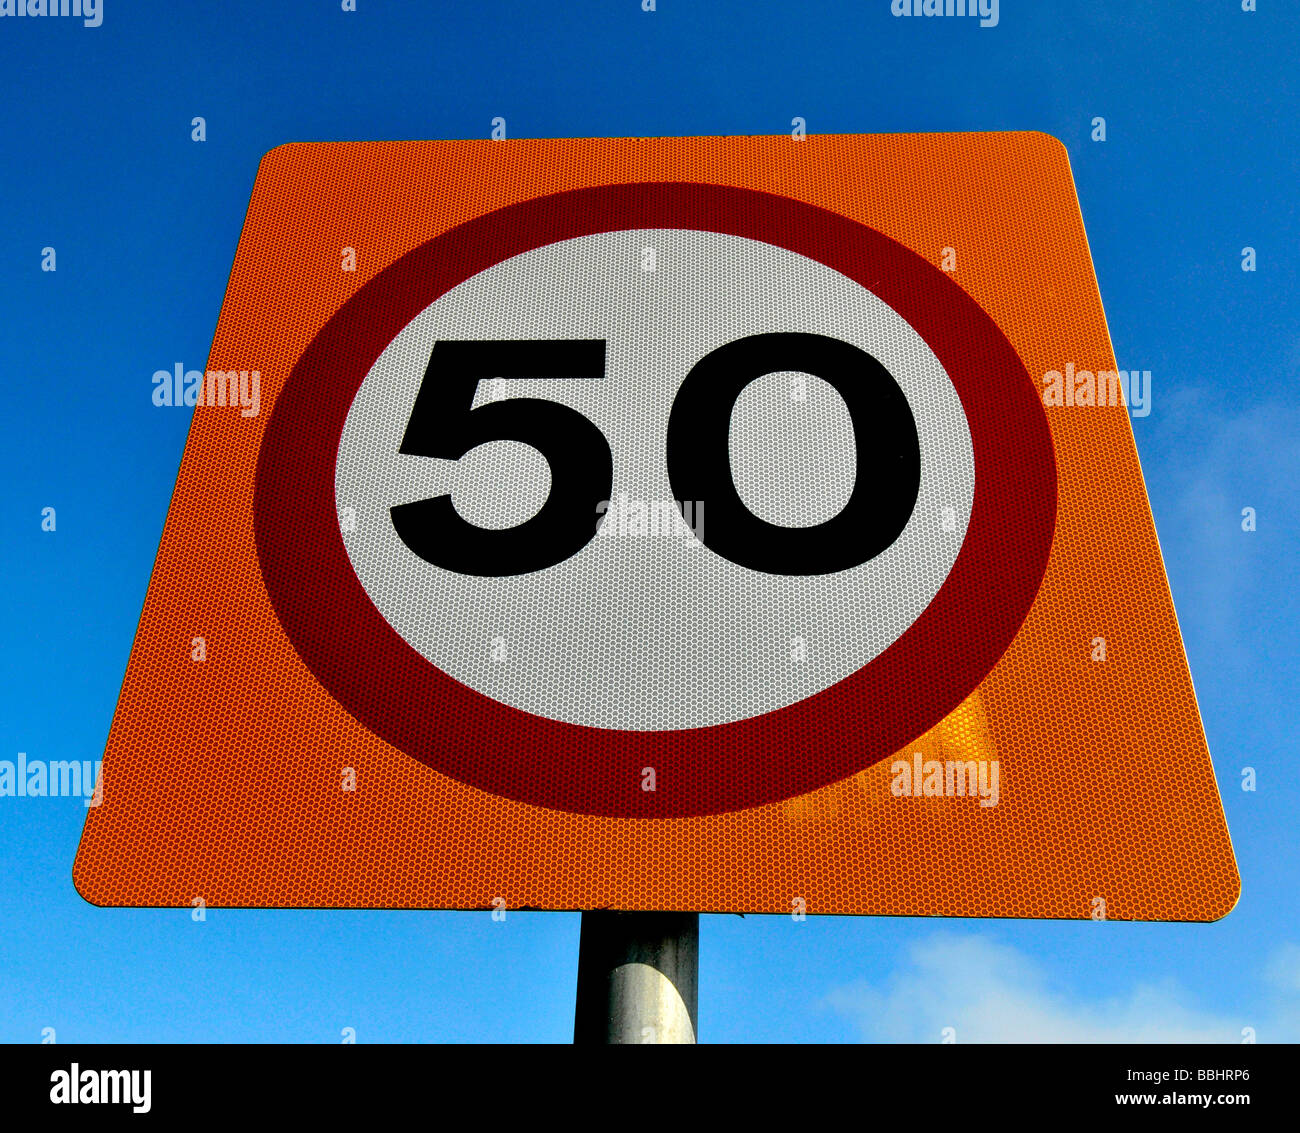 50mph speed limit sign, UK Stock Photo